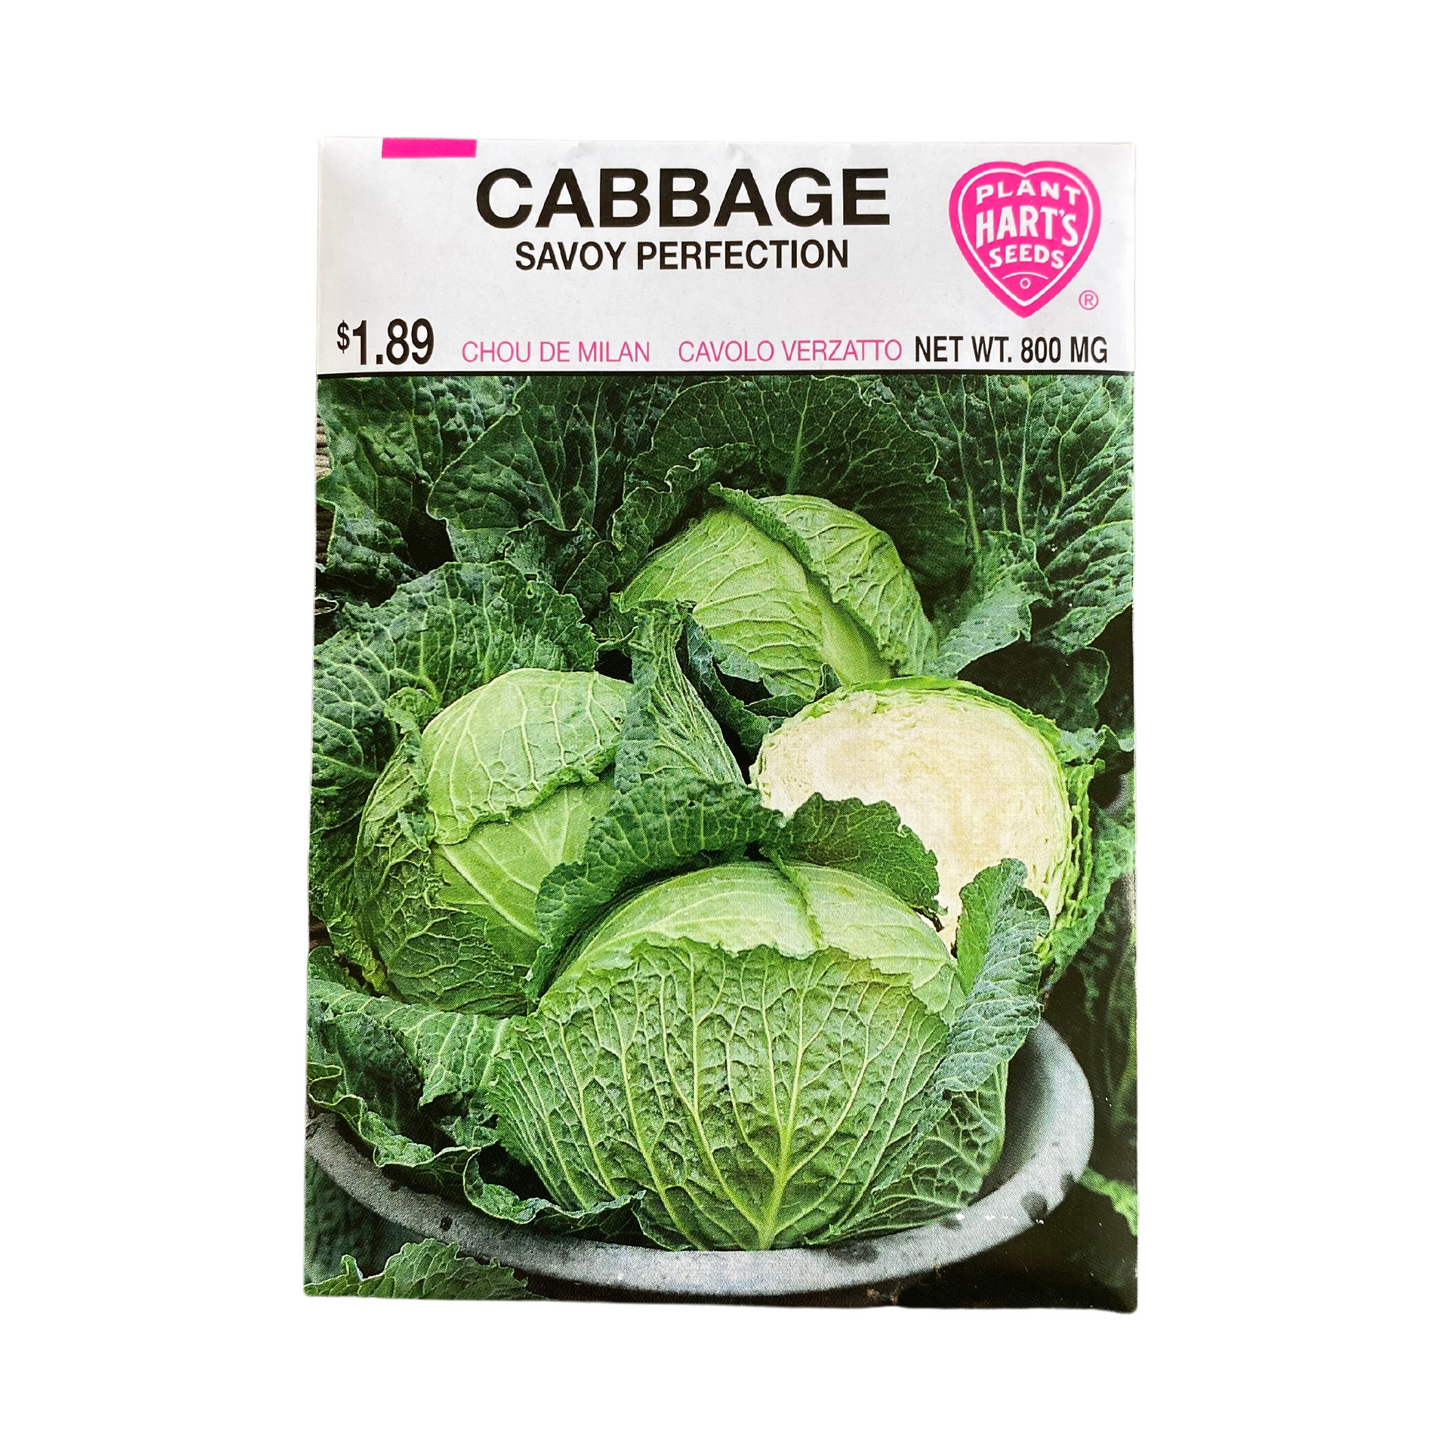 Cabbage Savoy Perfection